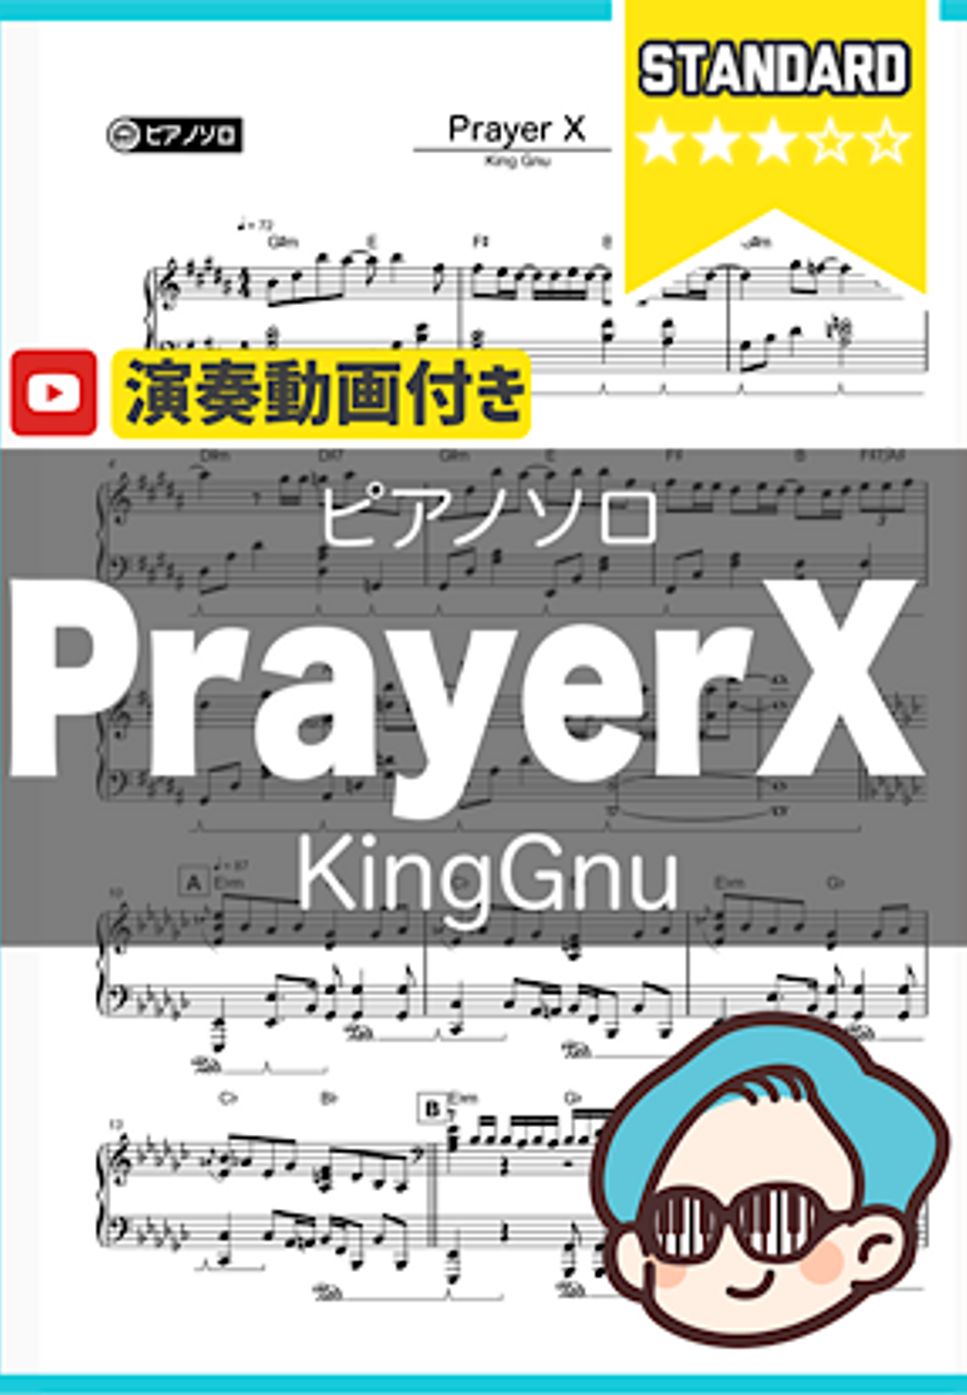 King Gnu - Prayer X by THETA